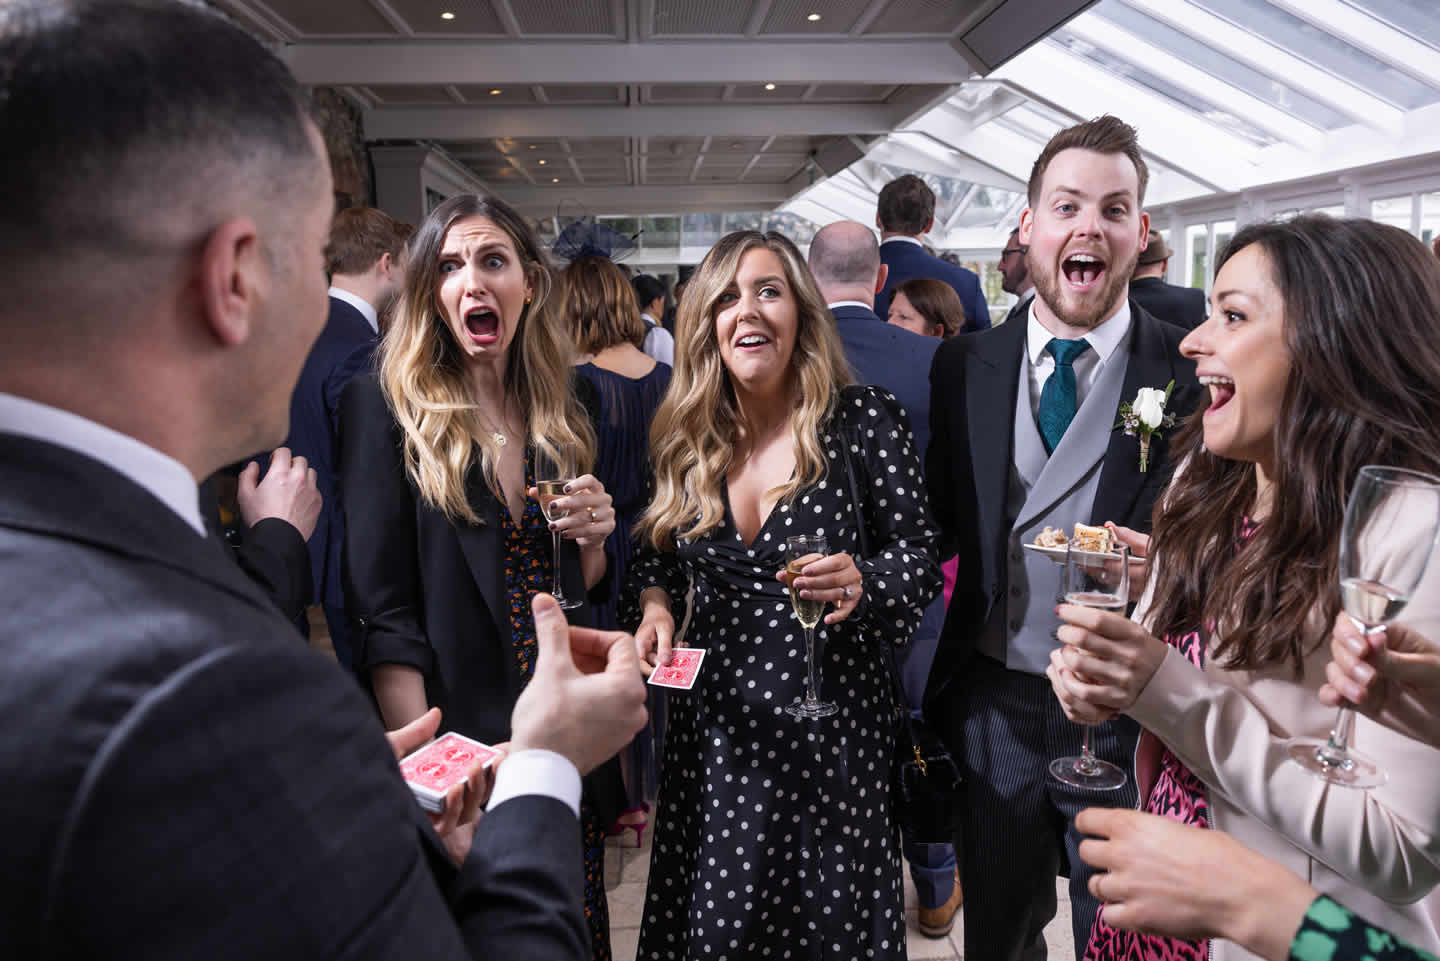 Shane Black Mentalist converting sceptical guest at wedding reception